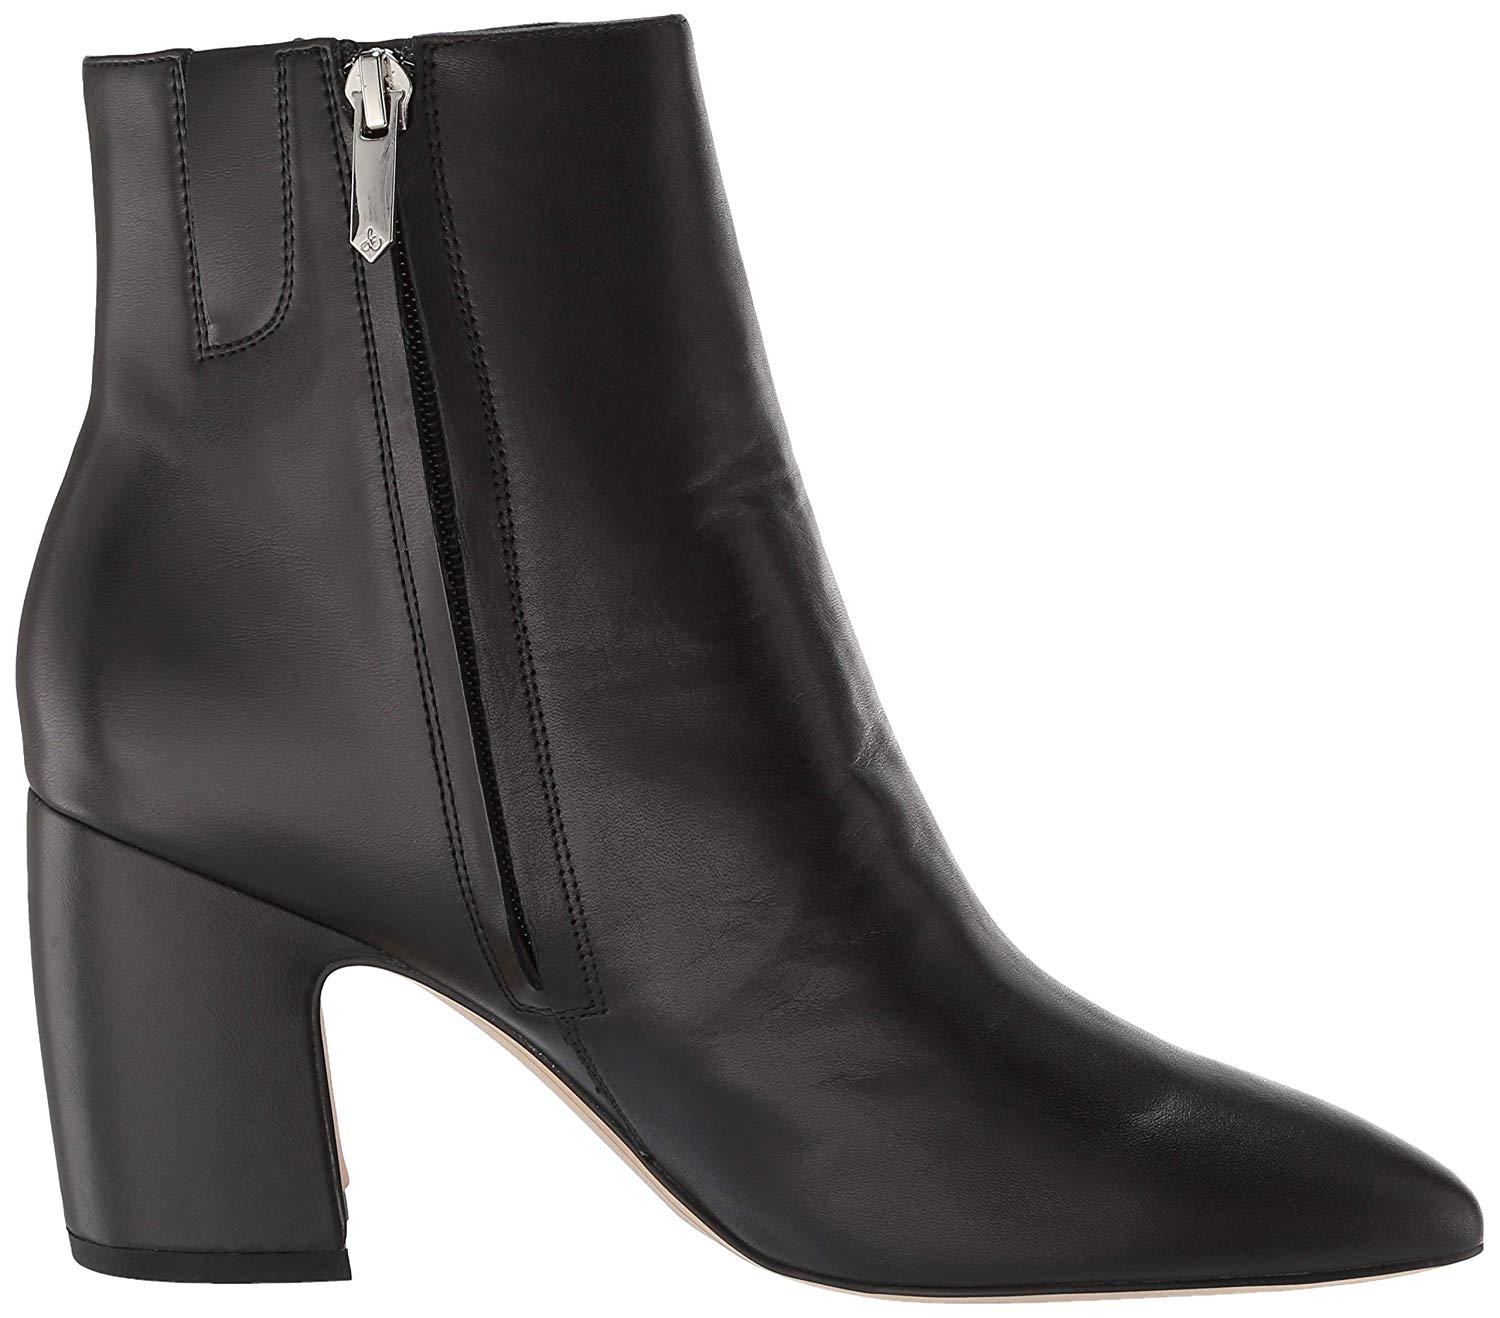 Sam Edelman Women's Hilty Ankle Boot, Black Leather, Size 8.0 APMj 736705210375 | eBay